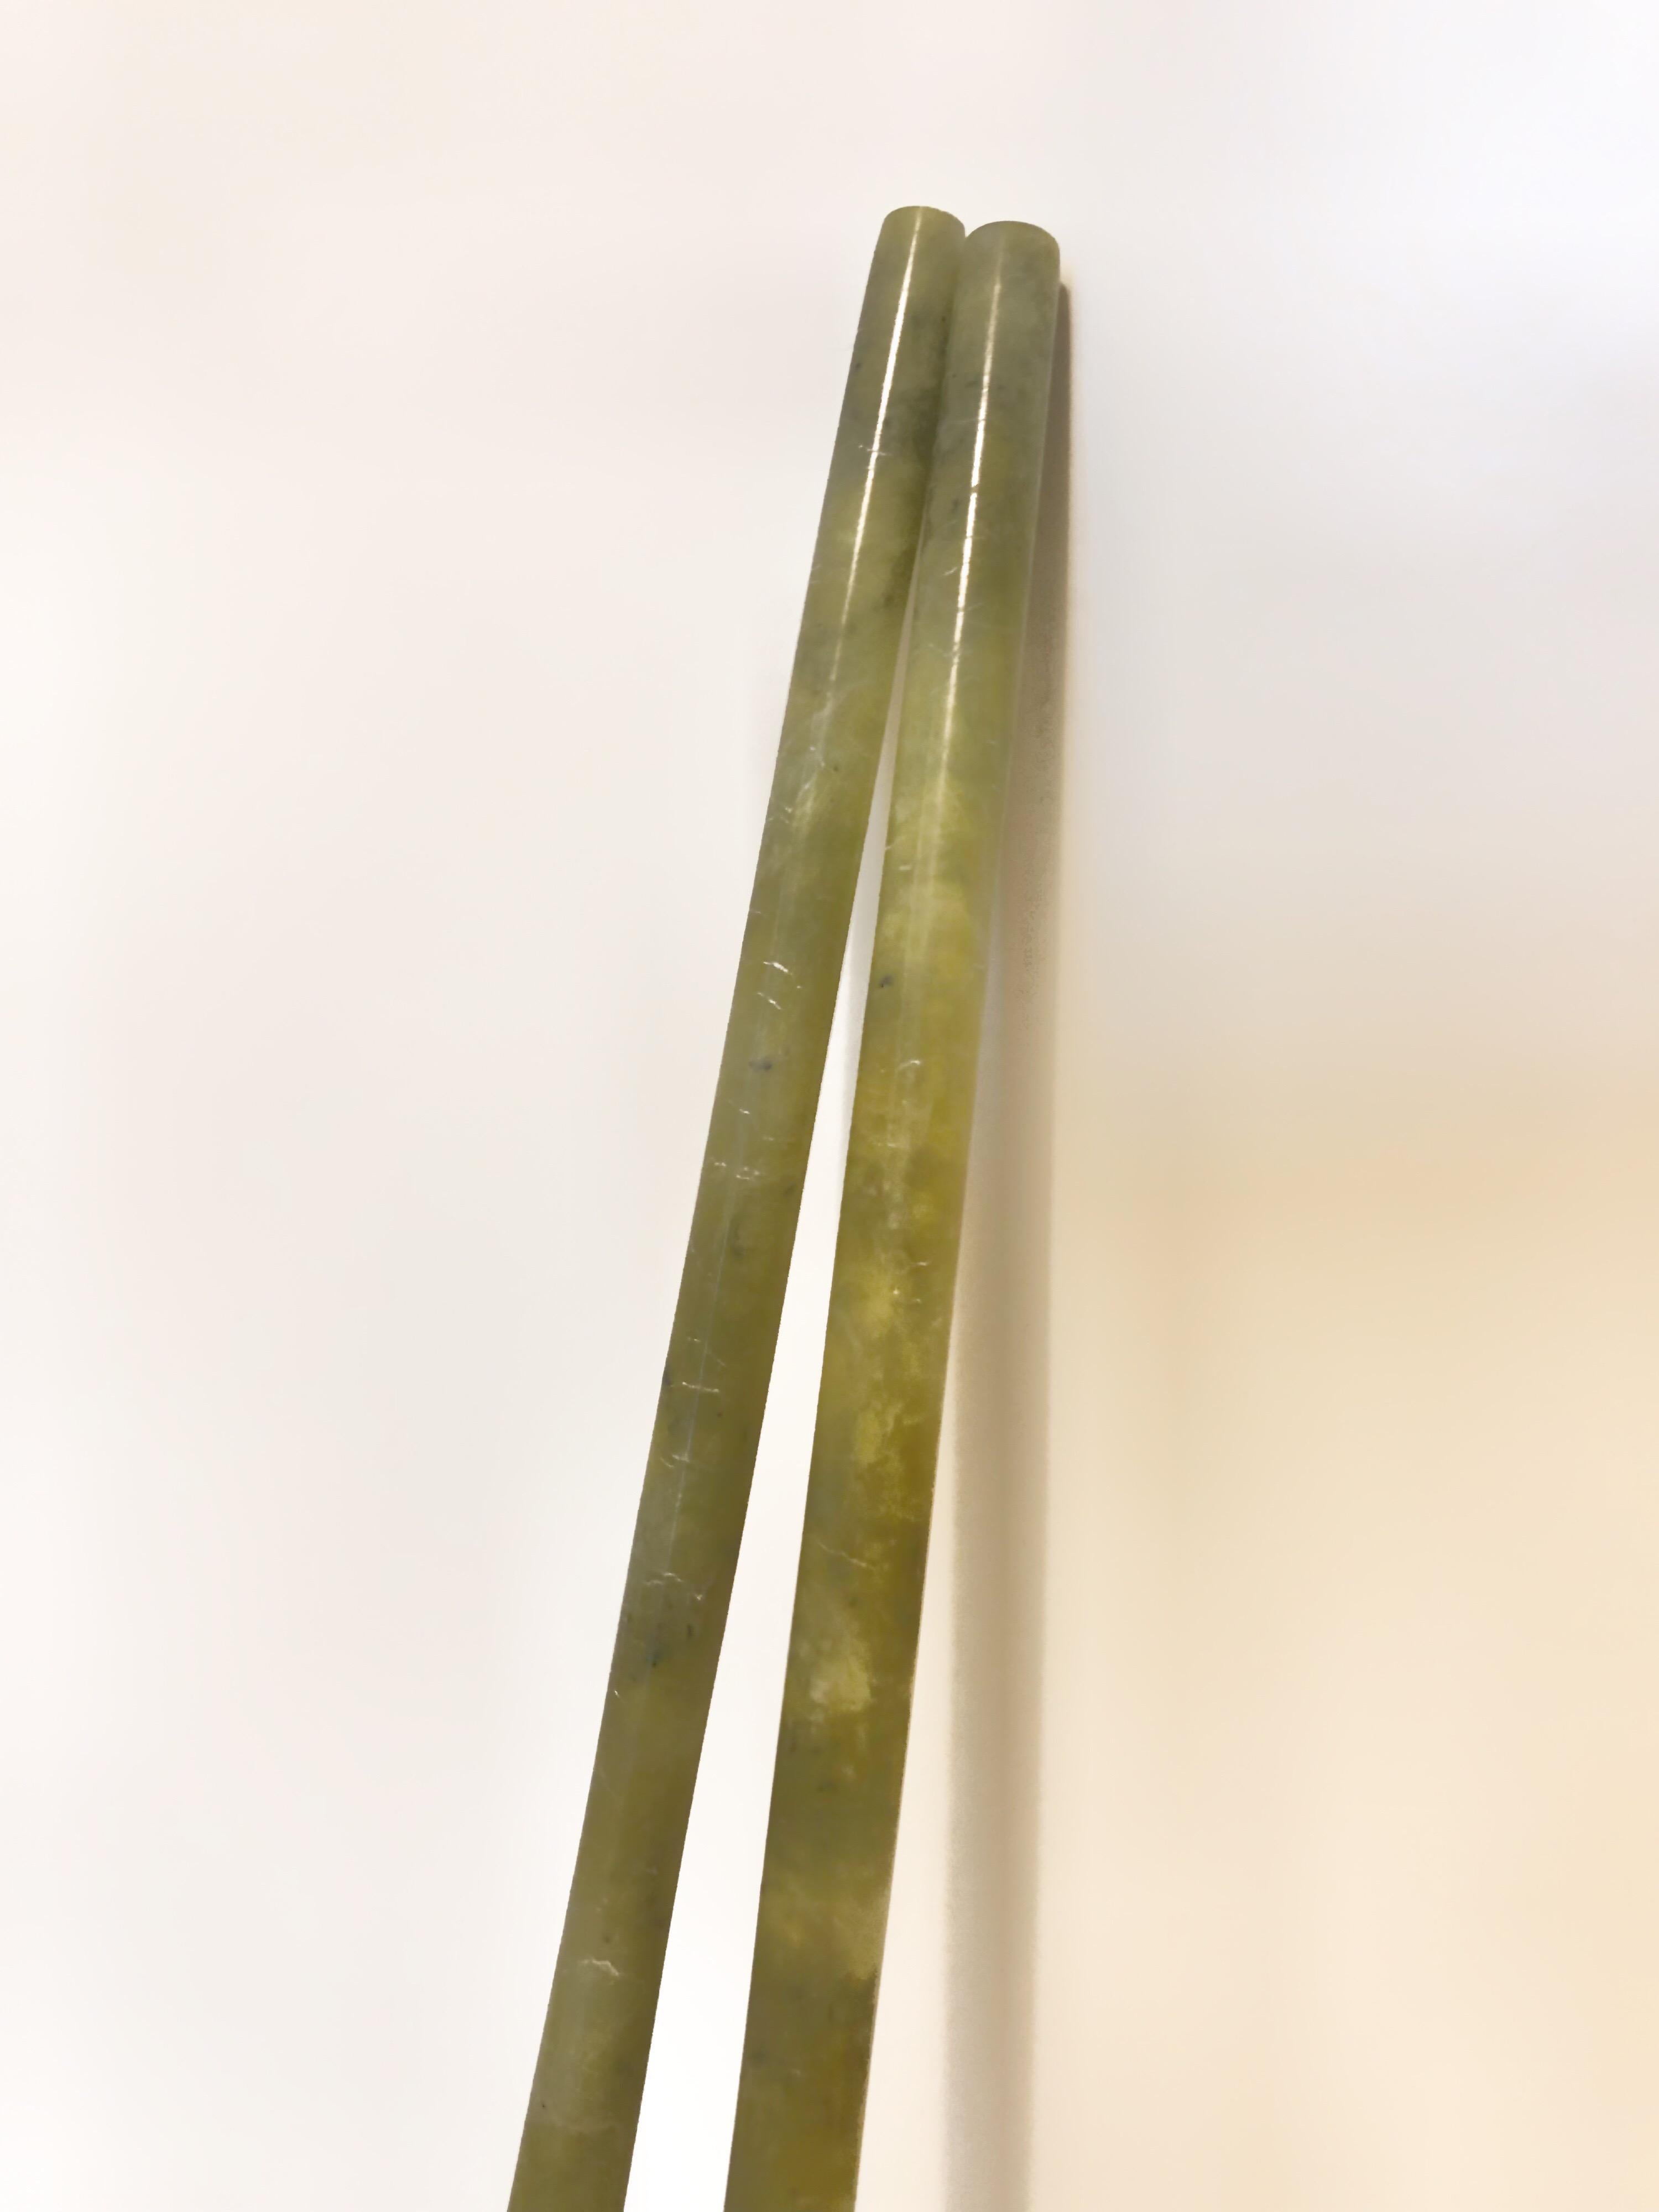 Other Chinese Natural Handmade Bowenite Chopsticks